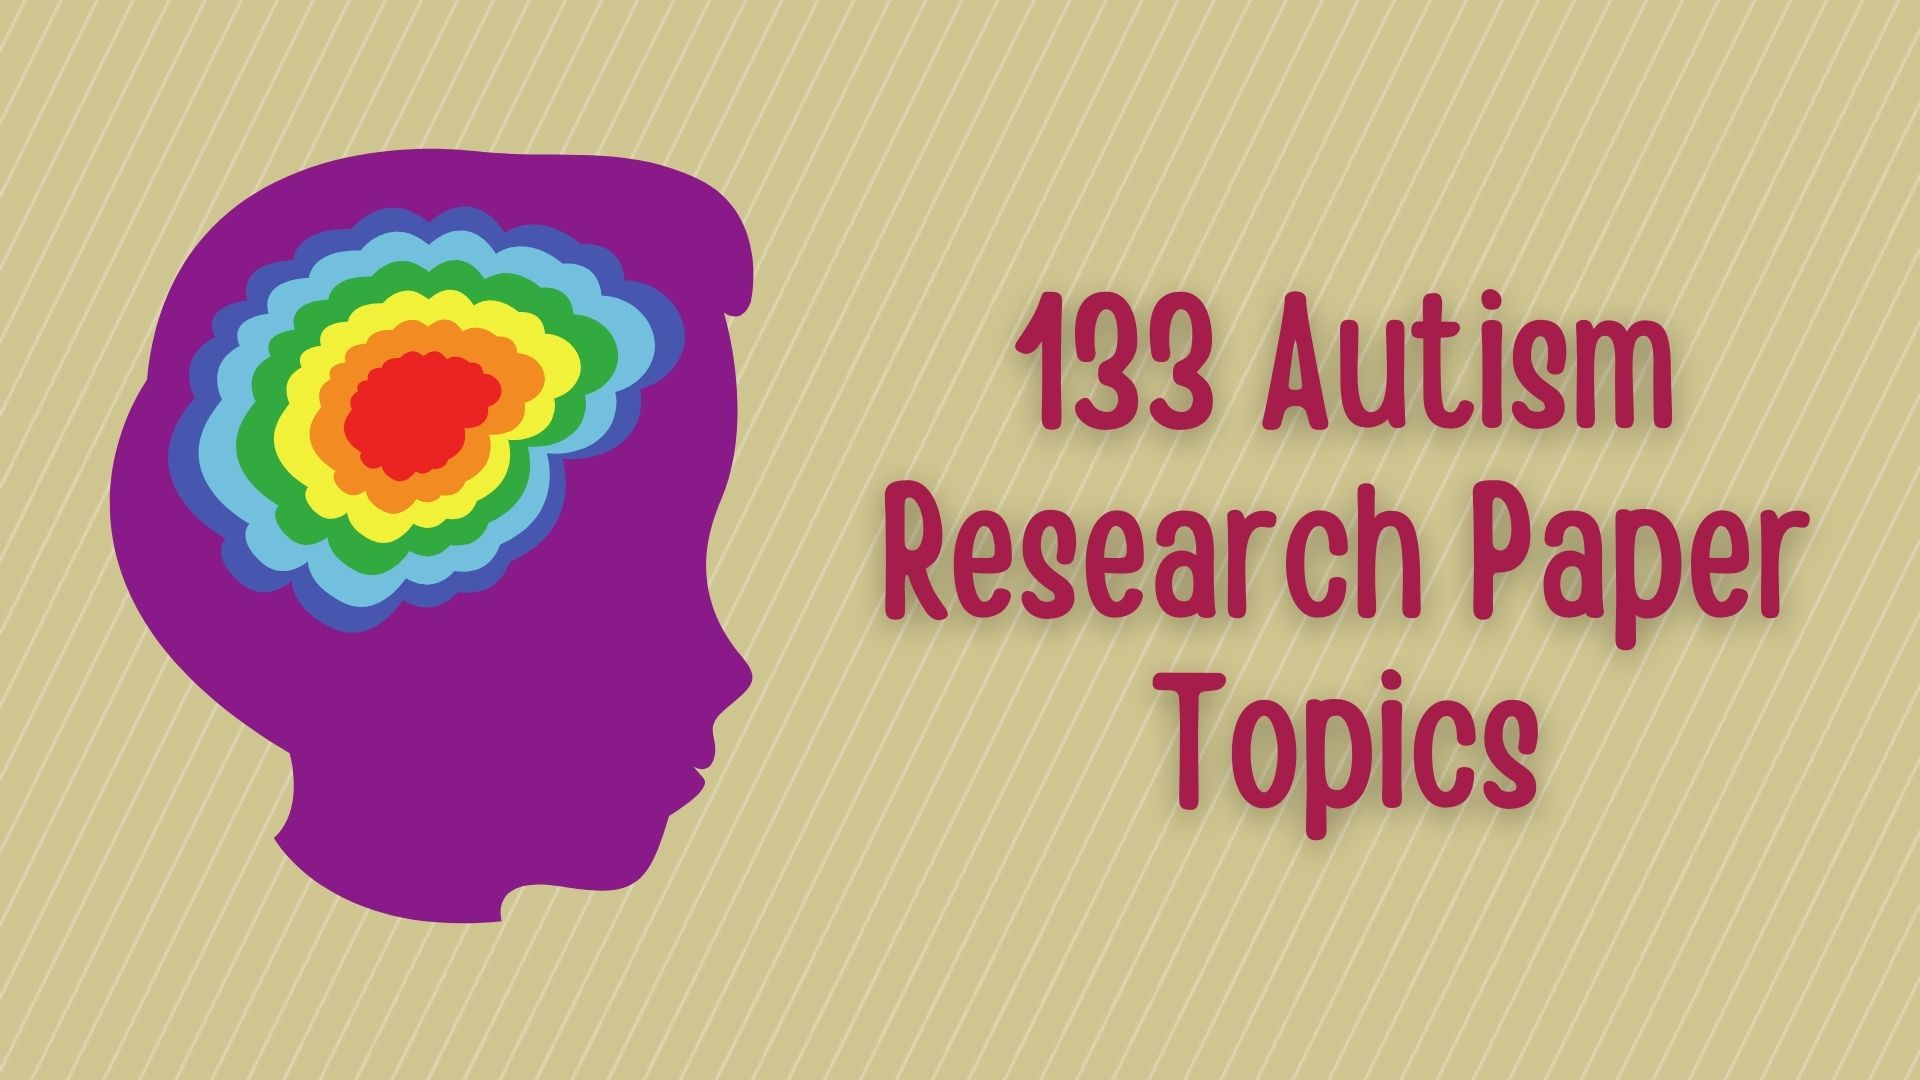 Autism Research Paper Topics